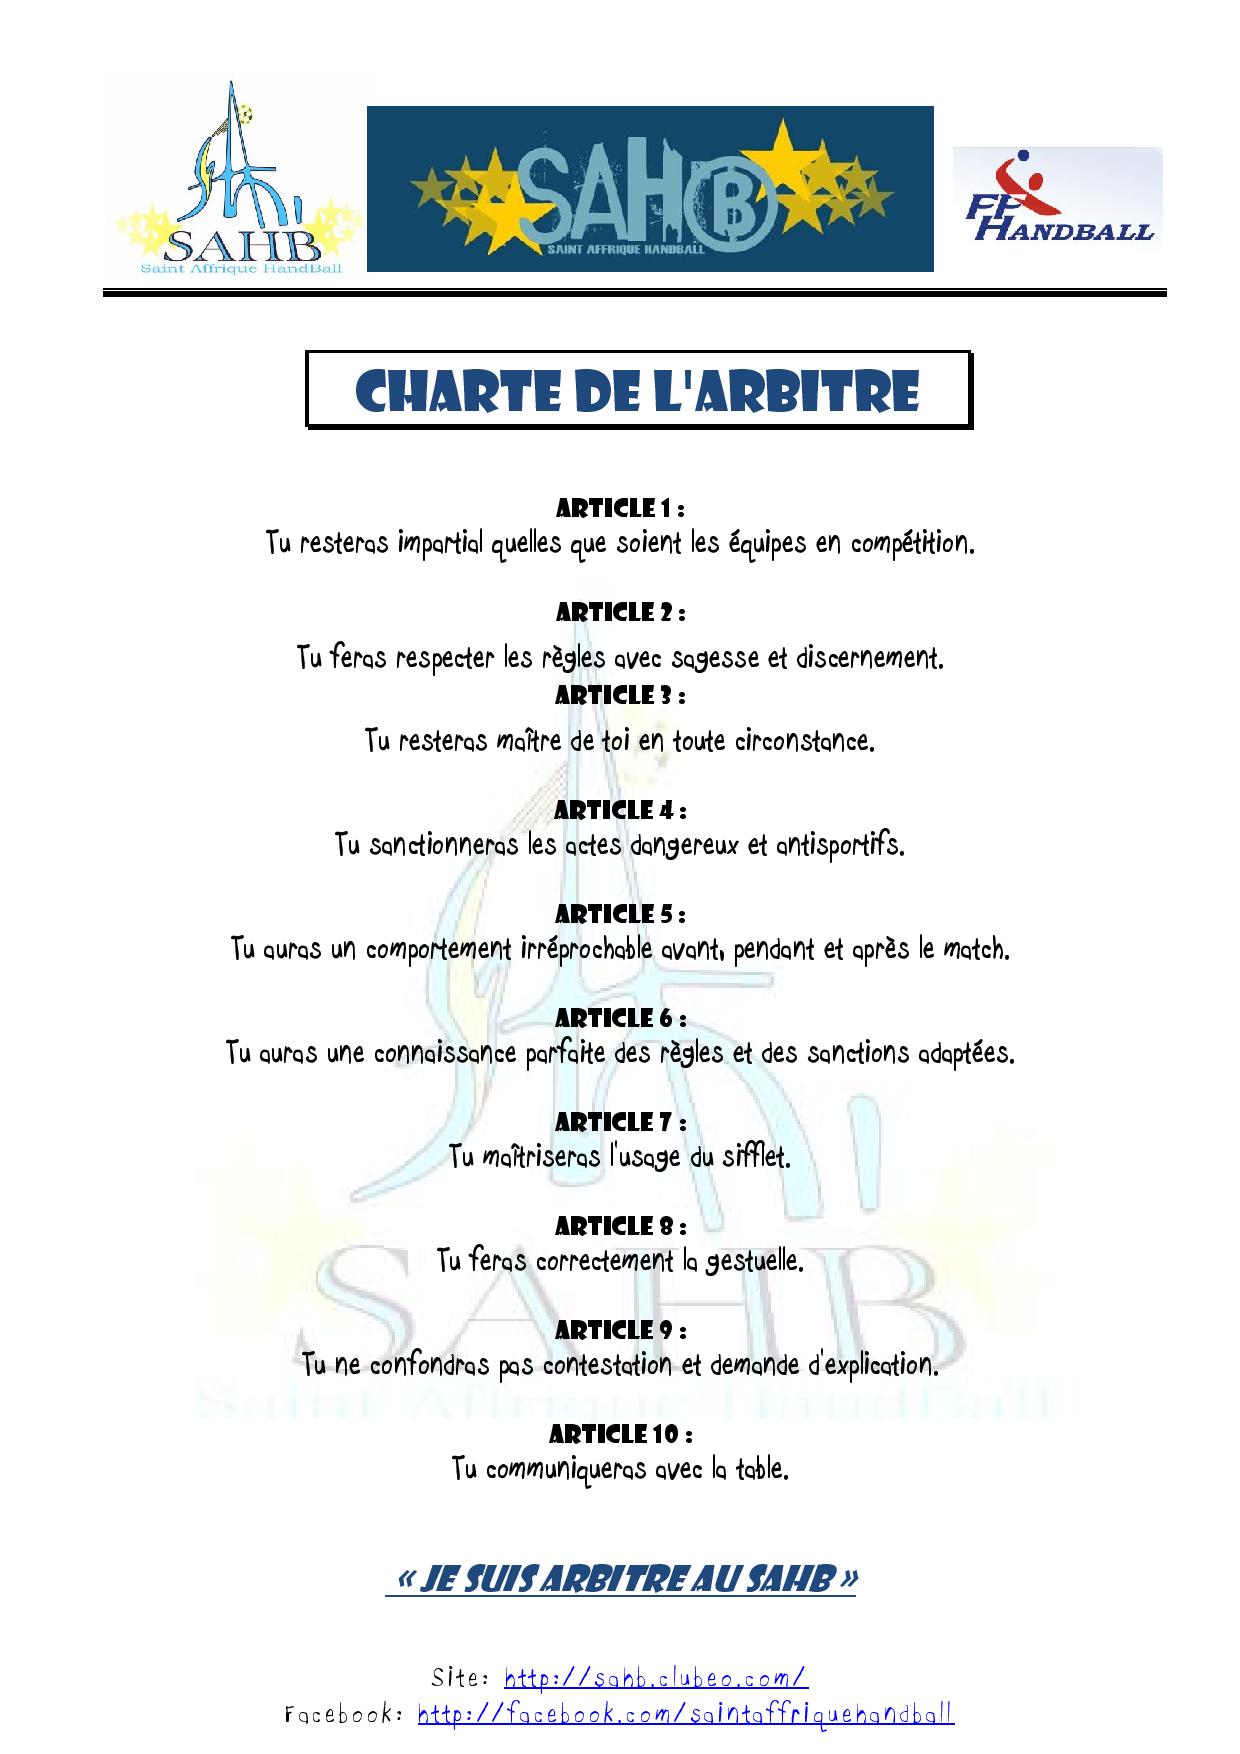 charte-arbitre (1)-page-001.jpg